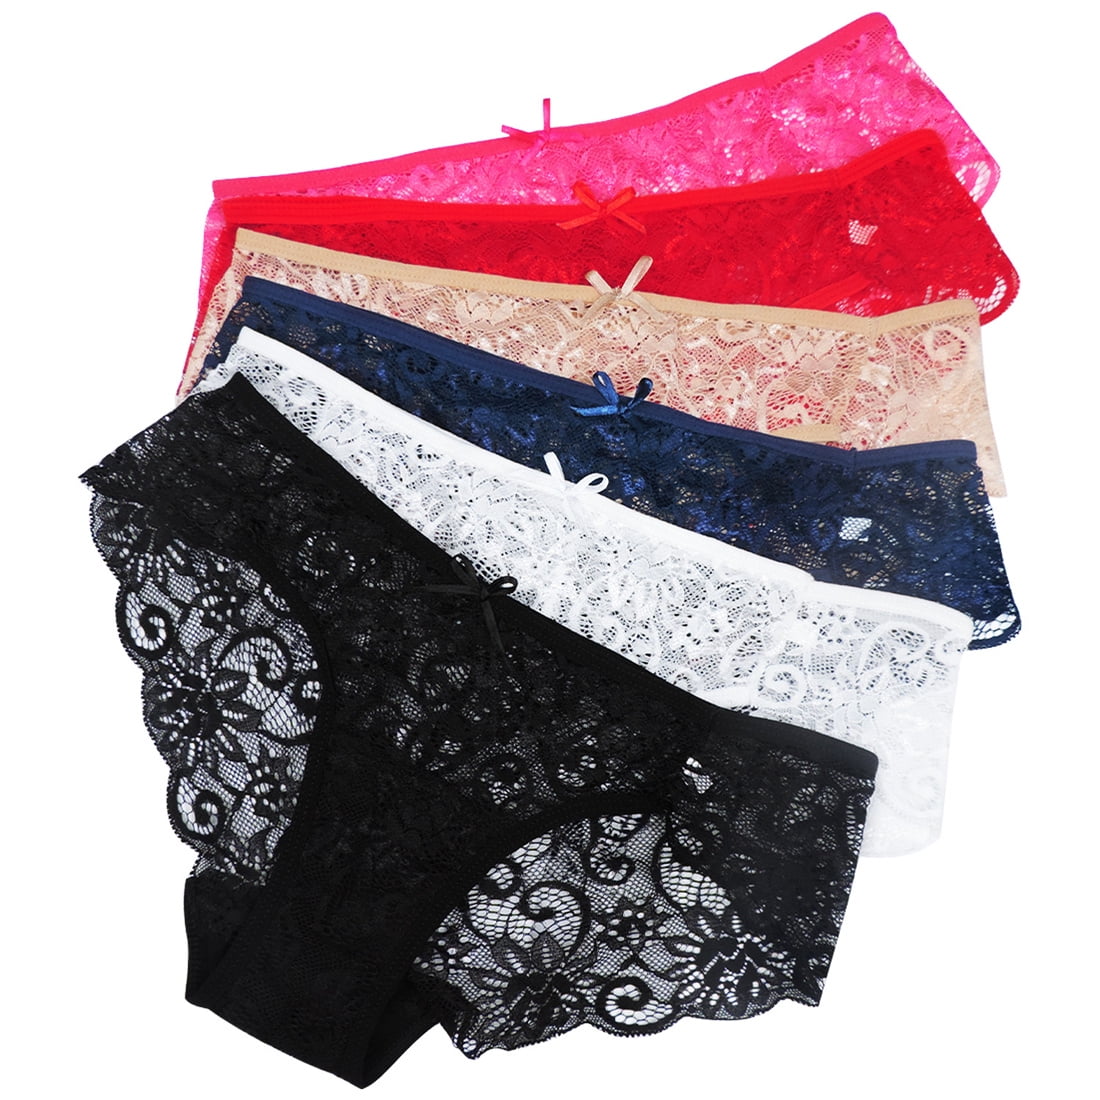 MRULIC panties for women Sexy Panties Thongs For Women Letter Rhinestones G  String Low Rise Tanga Stretch Underwear Pink + M 